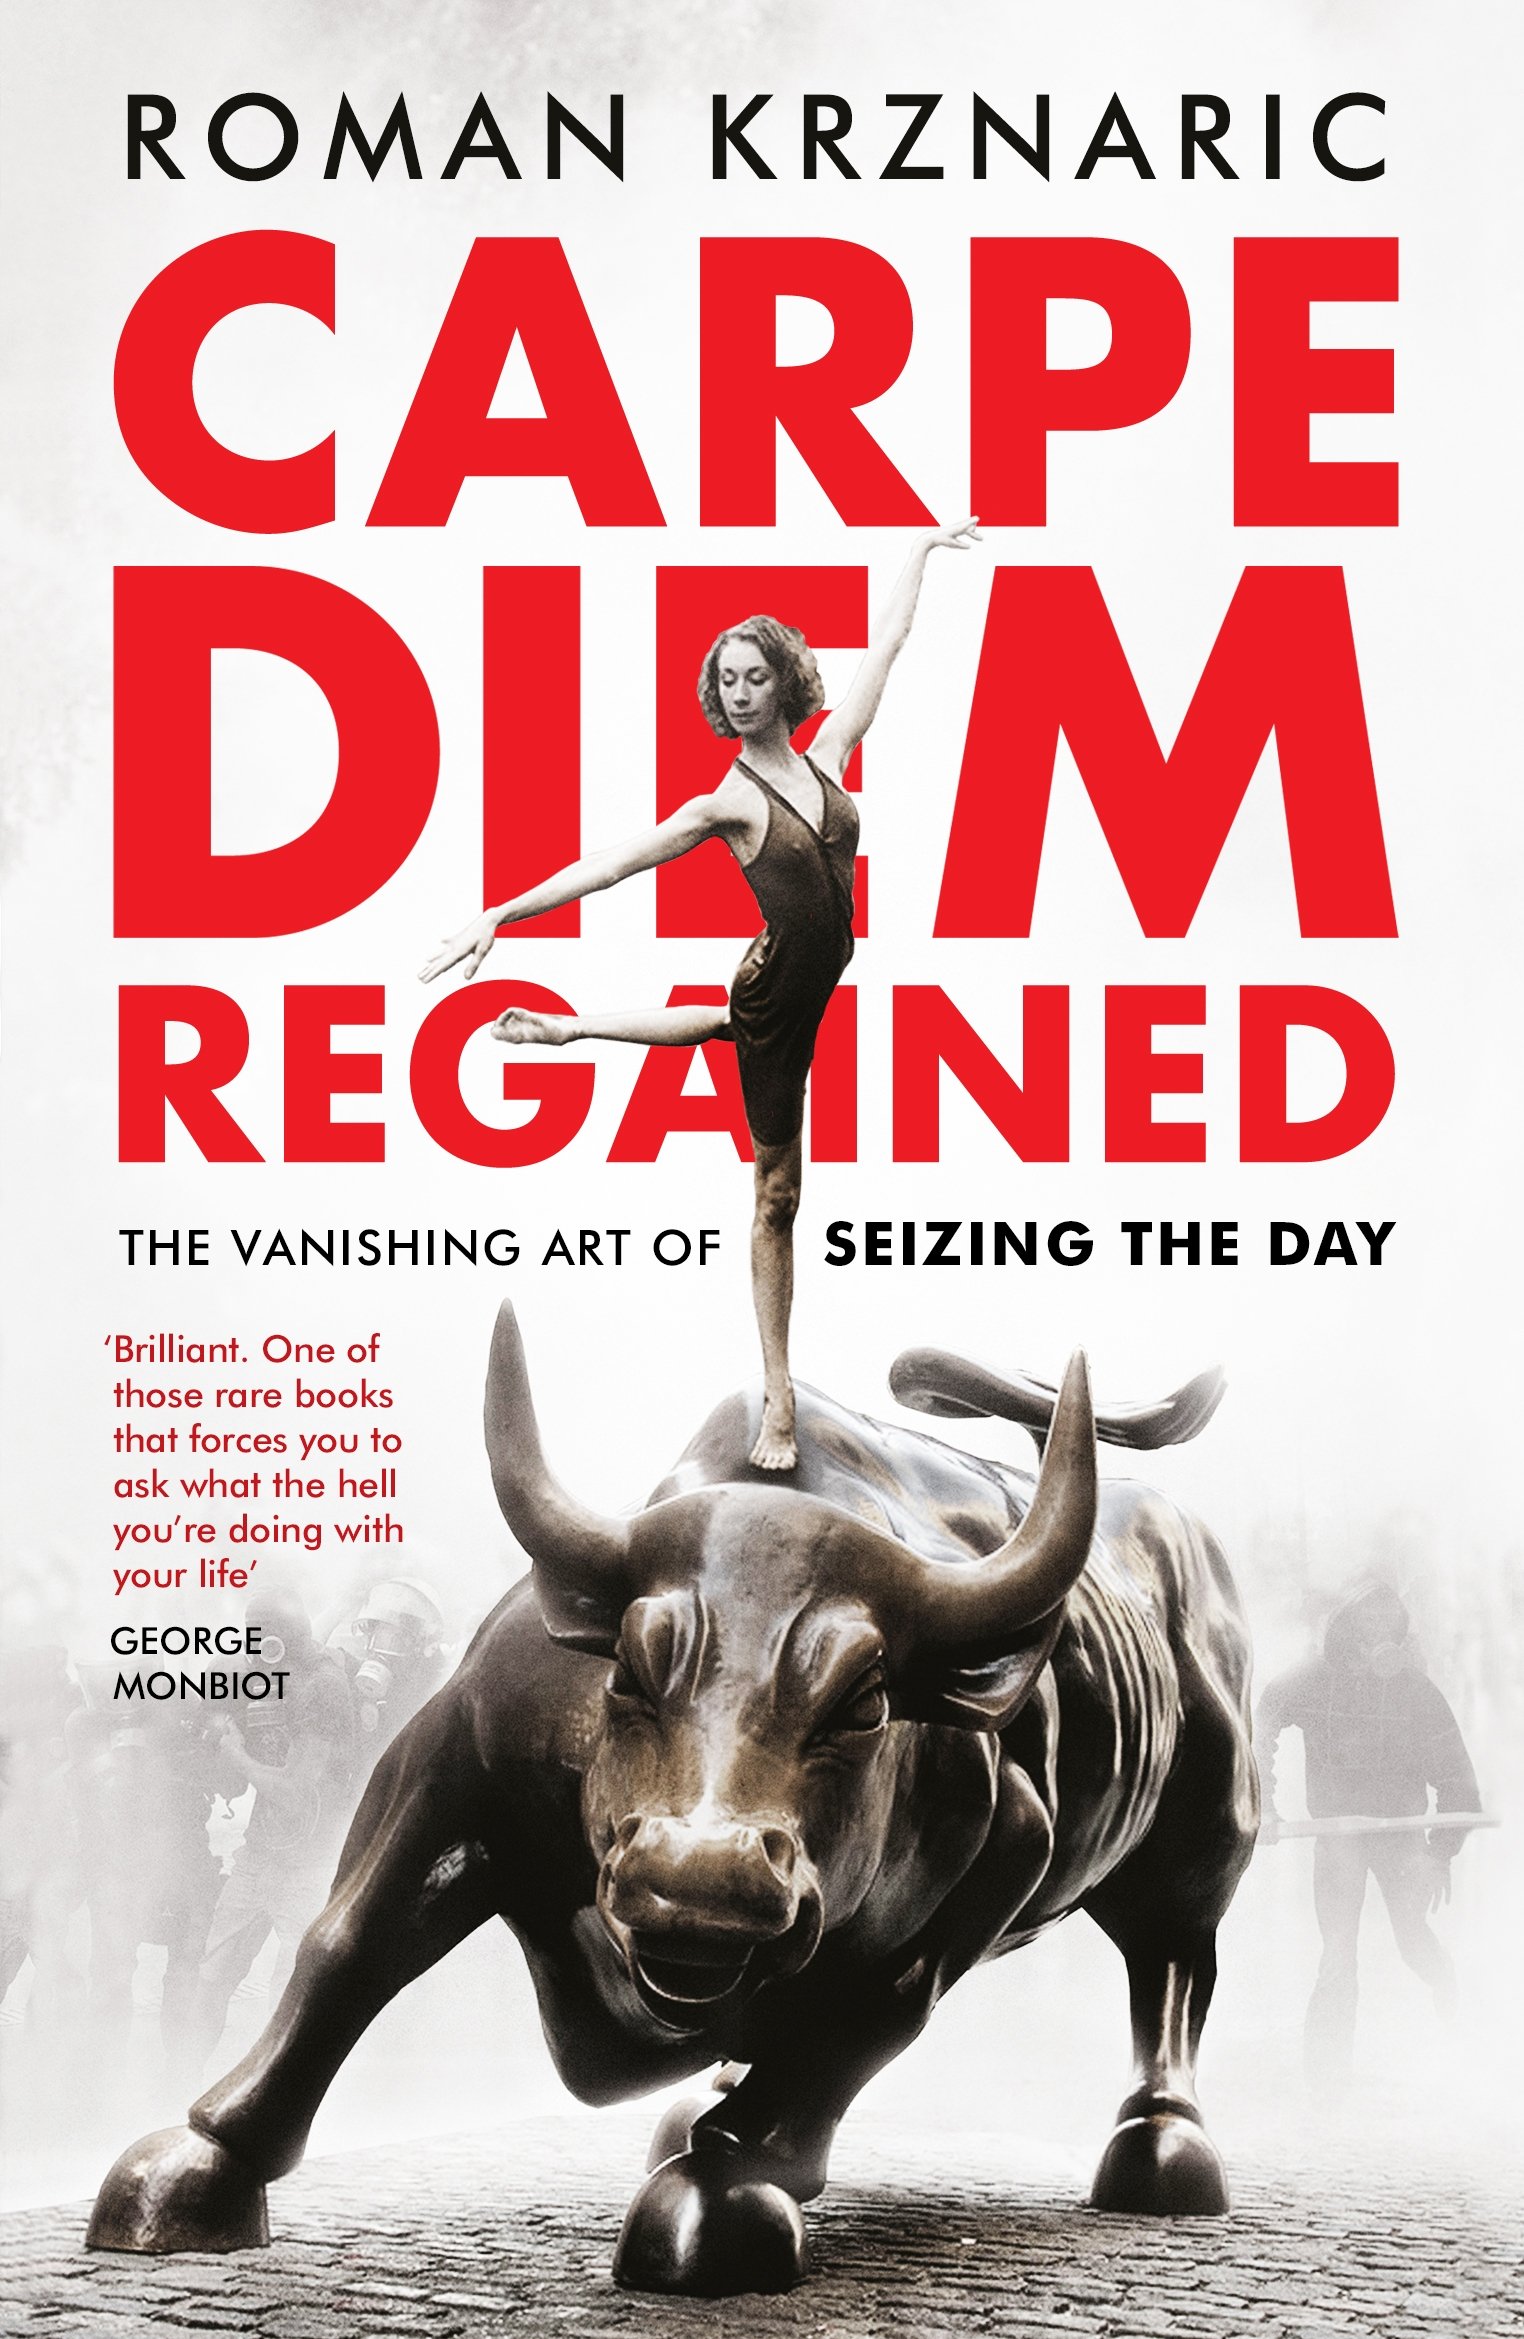 Carpe Diem Regained: The Vanishing Art of Seizing the Day by Roman Krznaric.